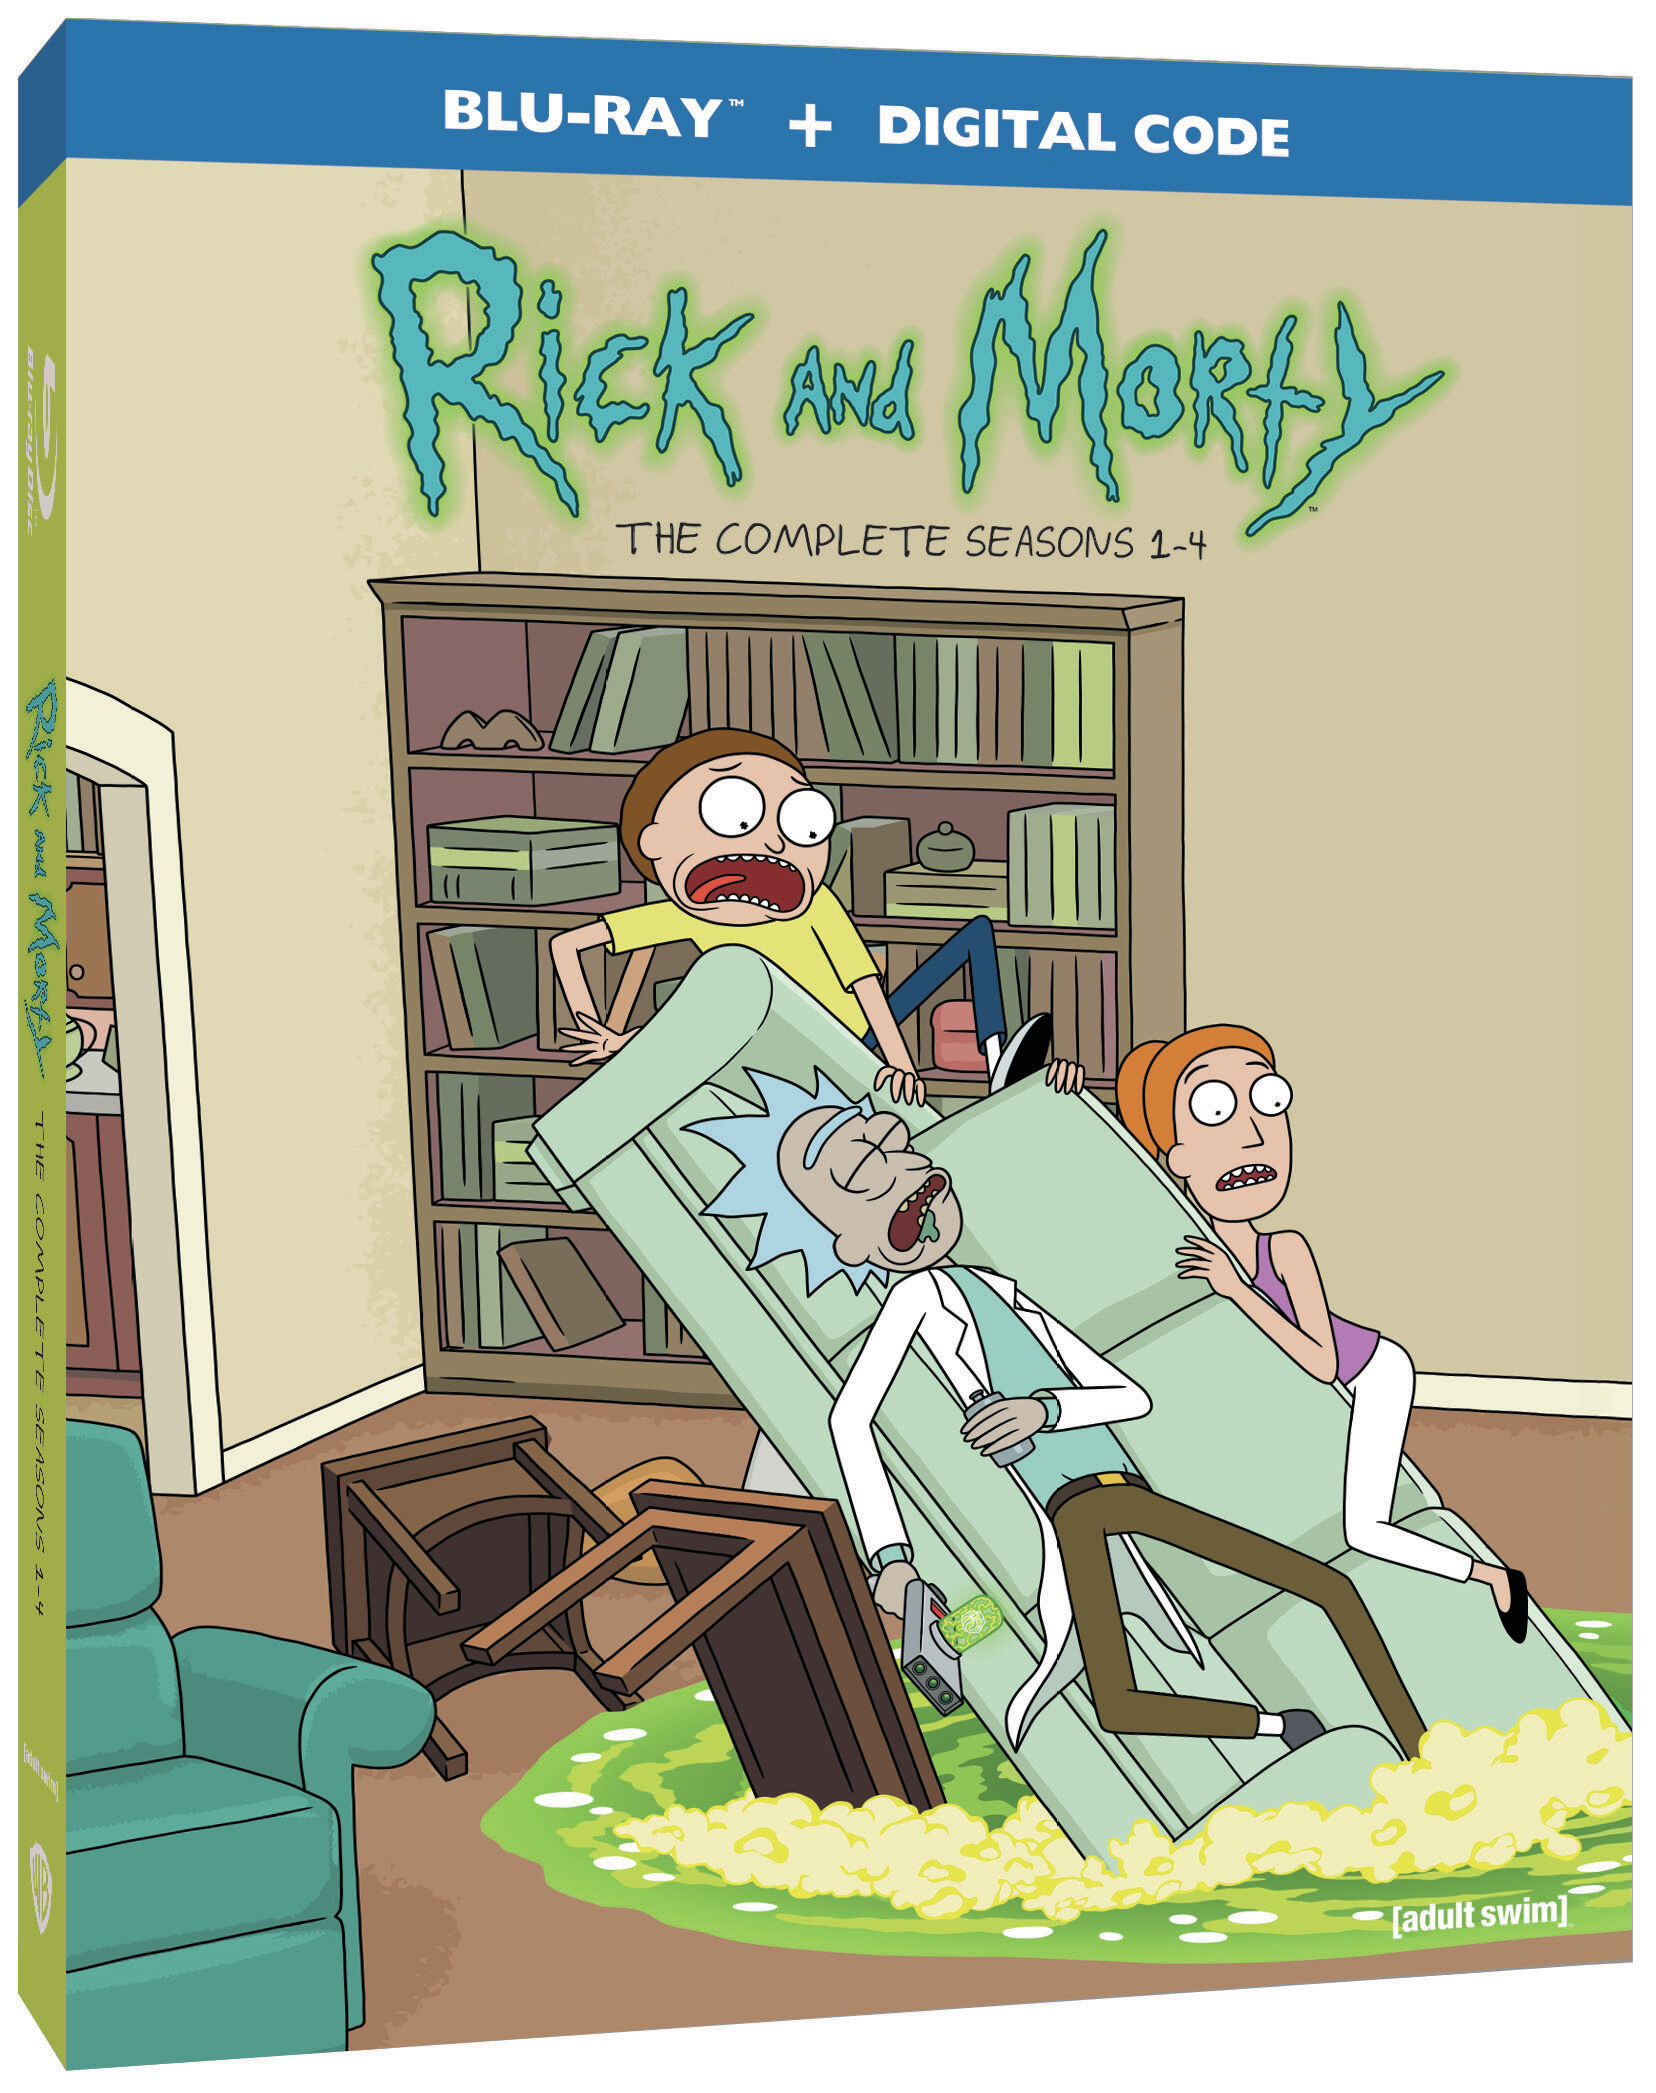 Rick & morty dvd